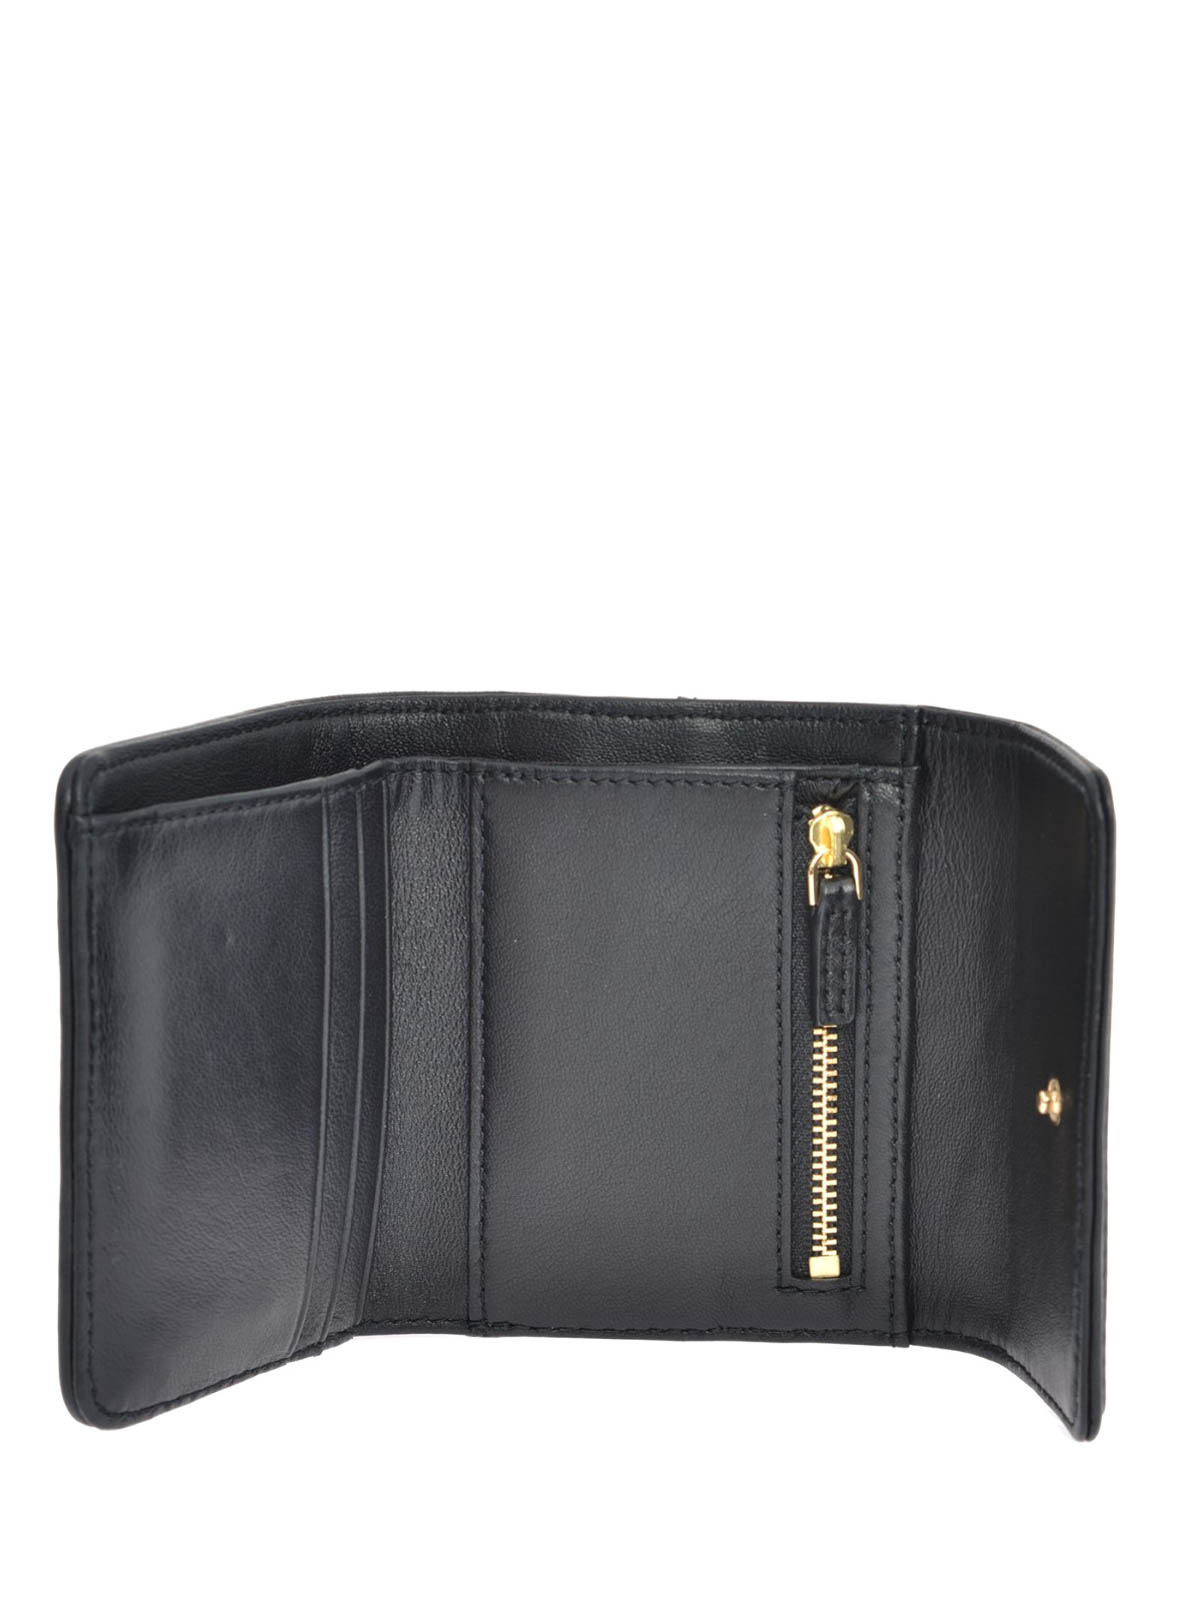 Tory Burch Women's Fleming Leather Wallet Bag - Gray - Wallets